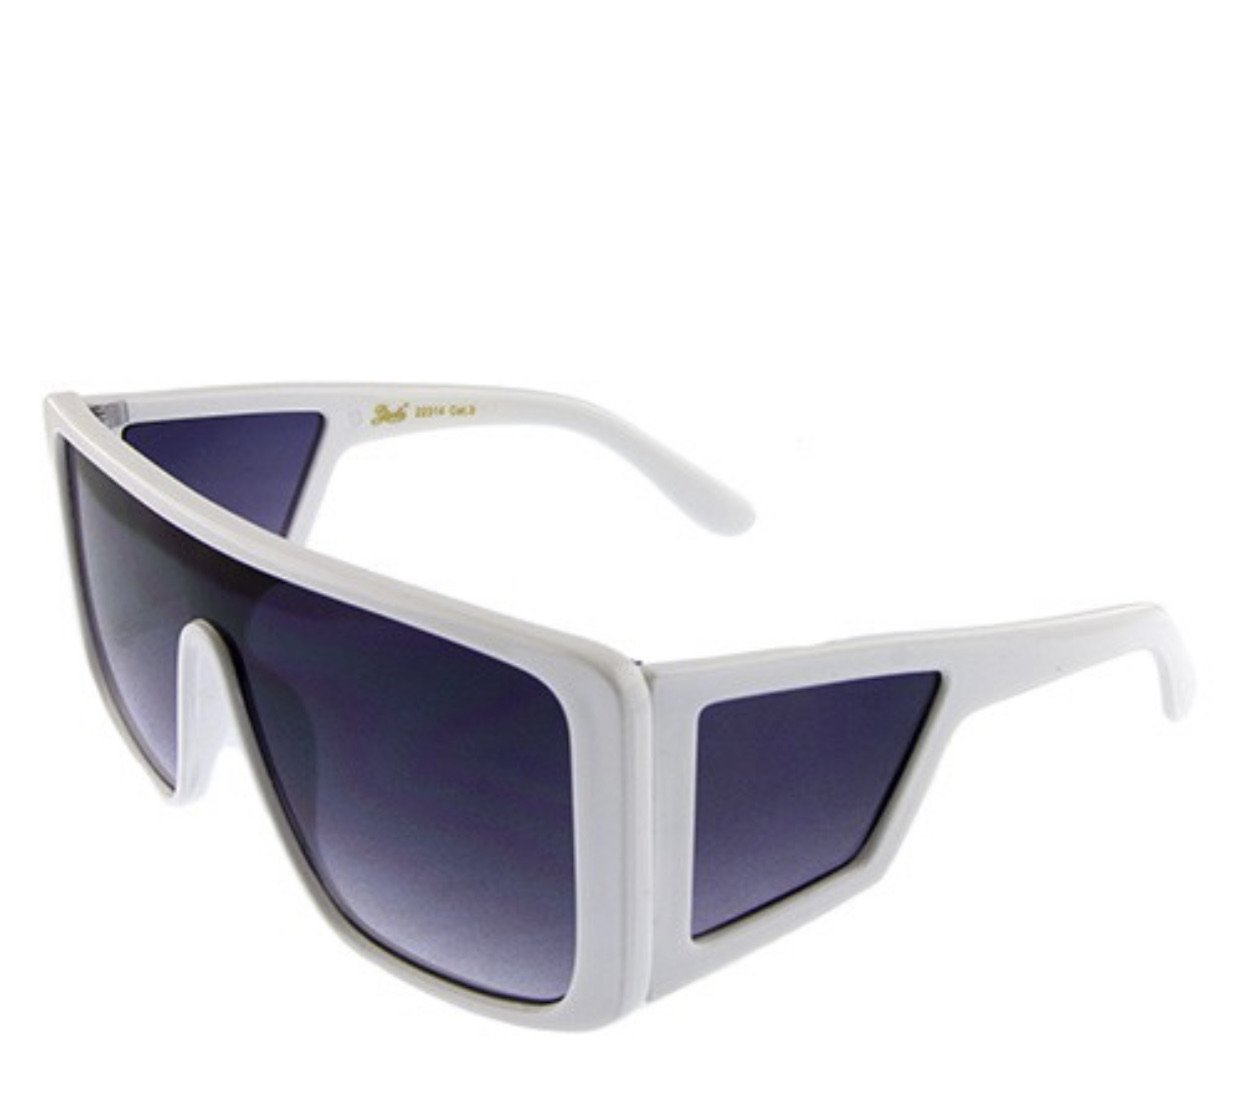 “FLIGHT” Fashion inspired Sunglasses - Weekend Shade Sunglasses